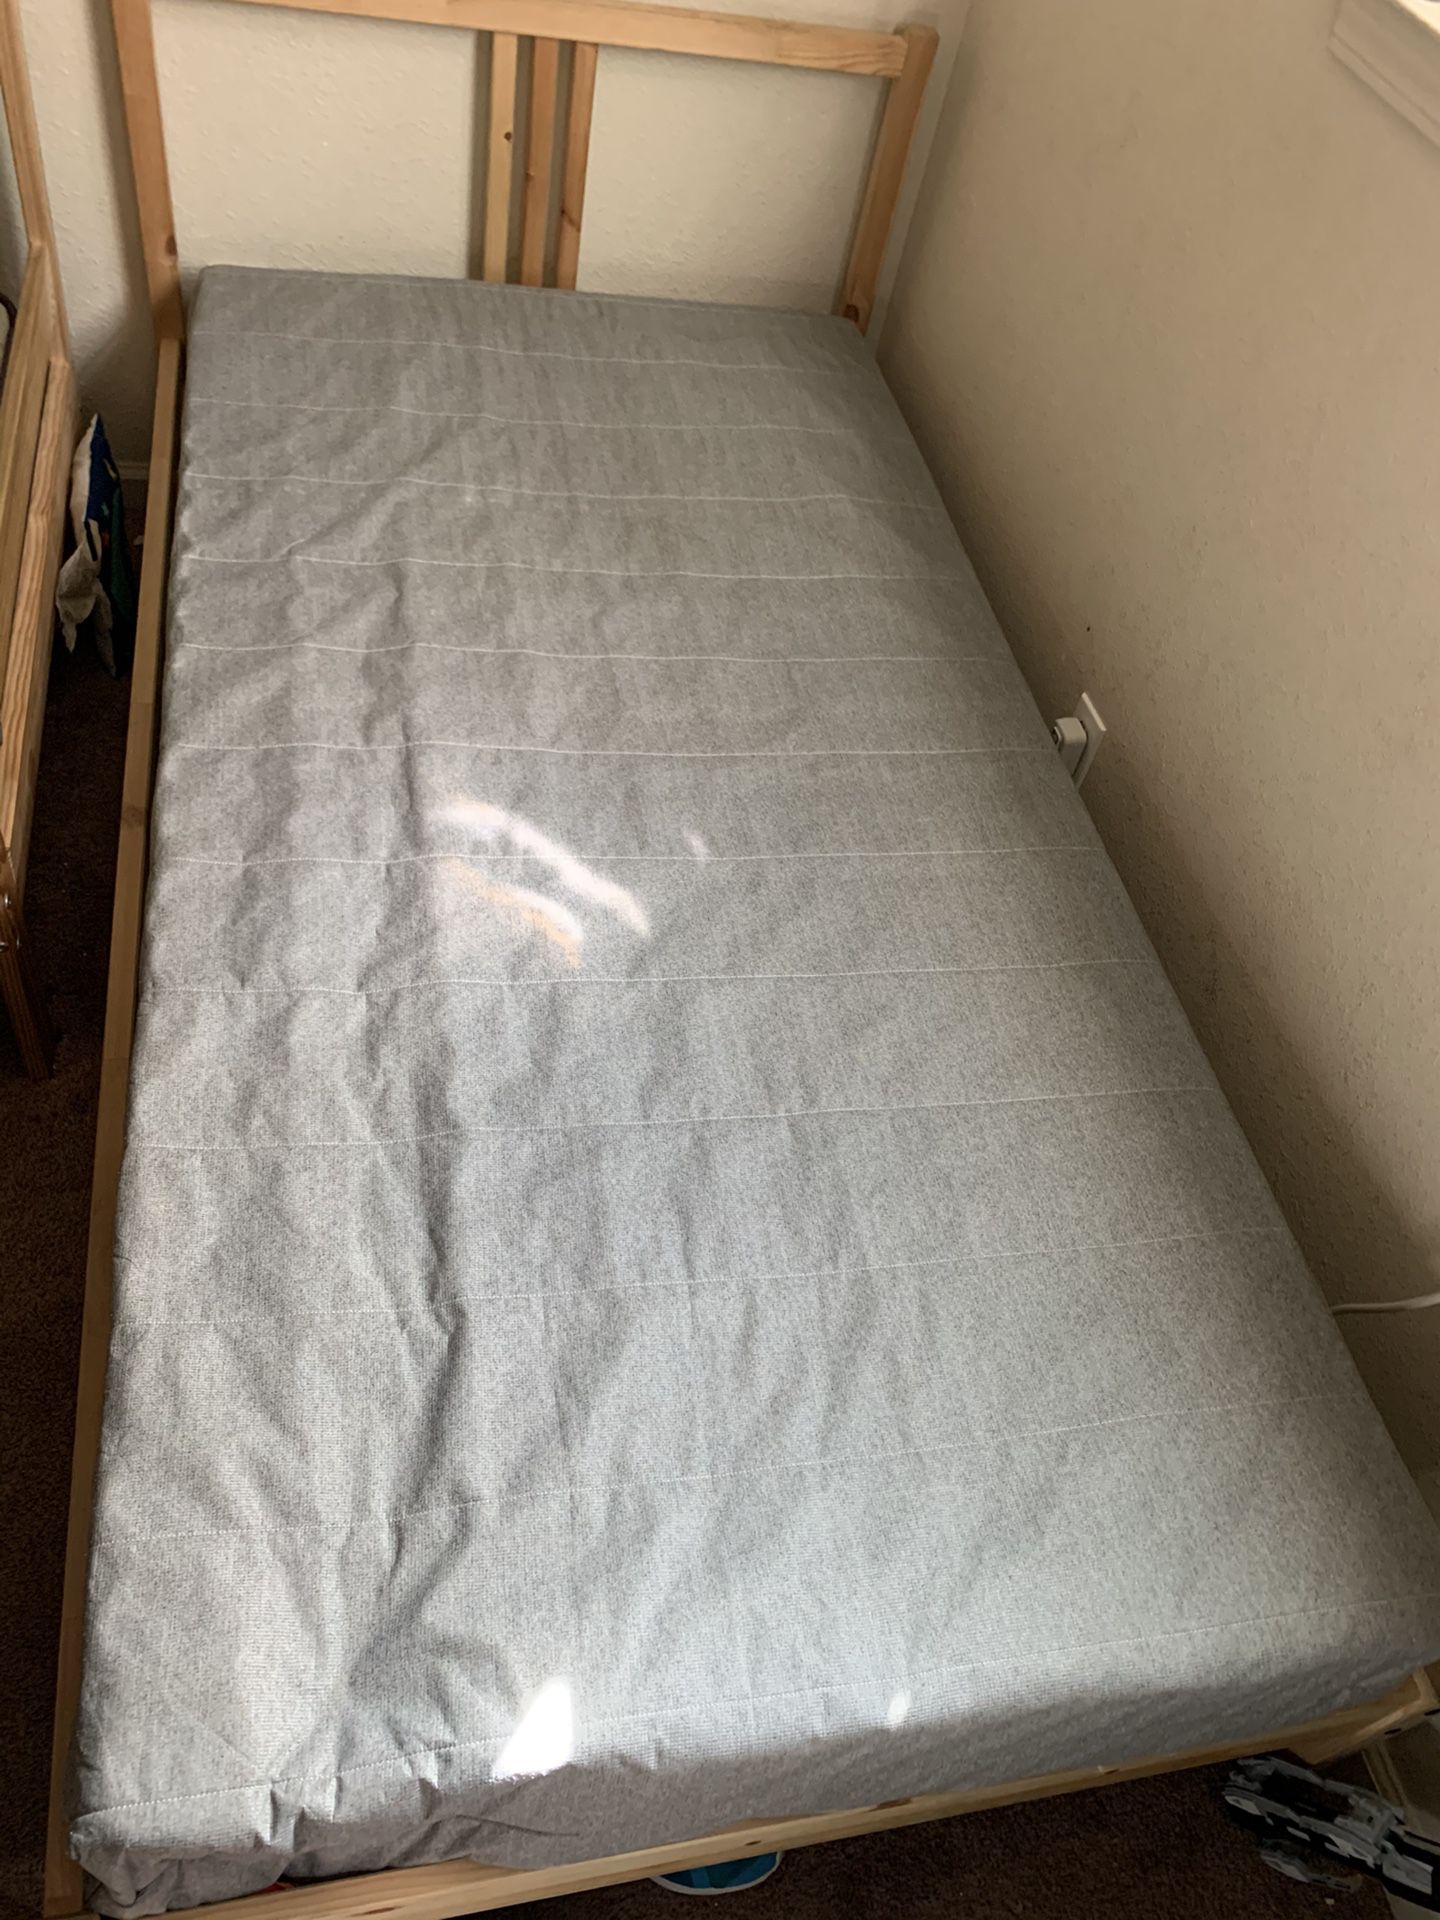 IKEA Twin Bed